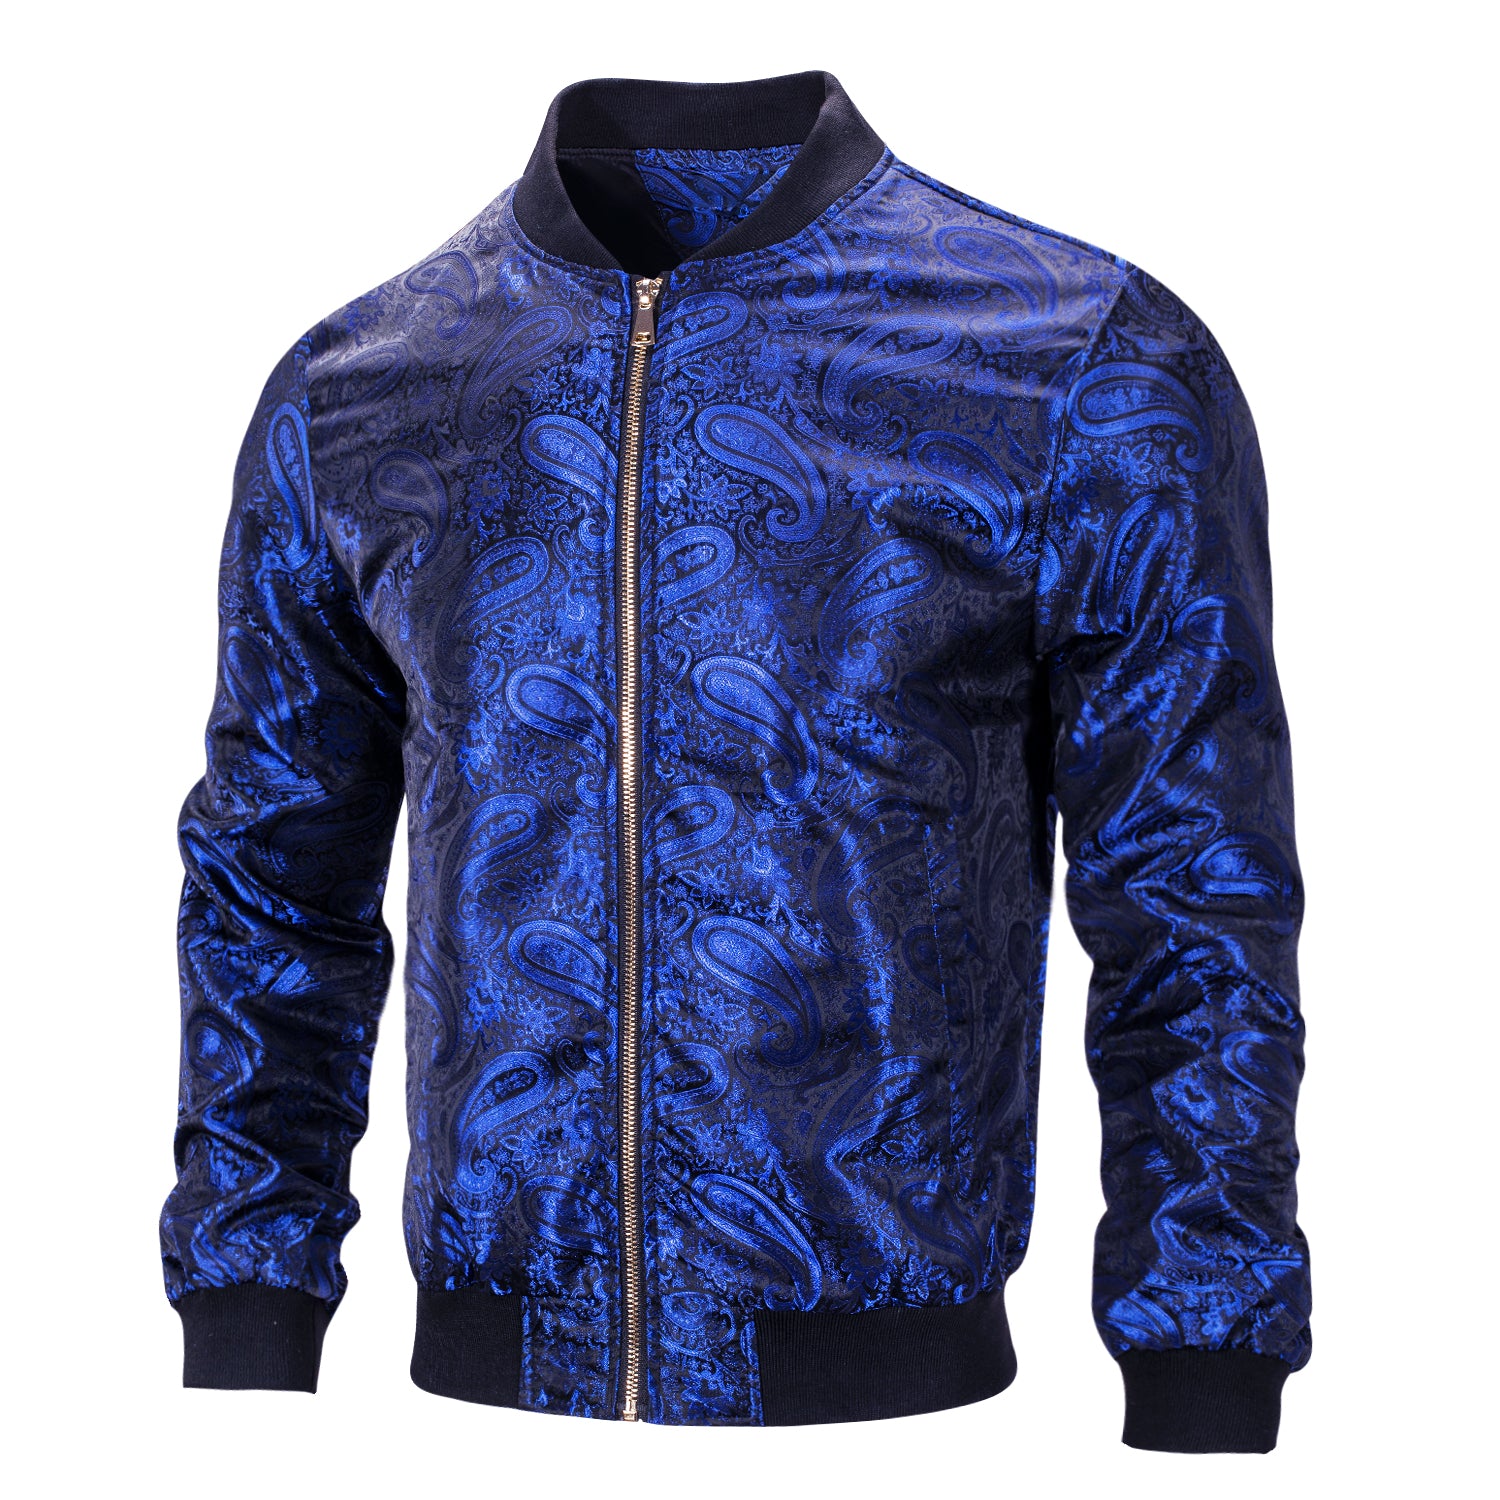 New Royal Blue Paisley Men's Urban Lightweight Zip Jacket Casual